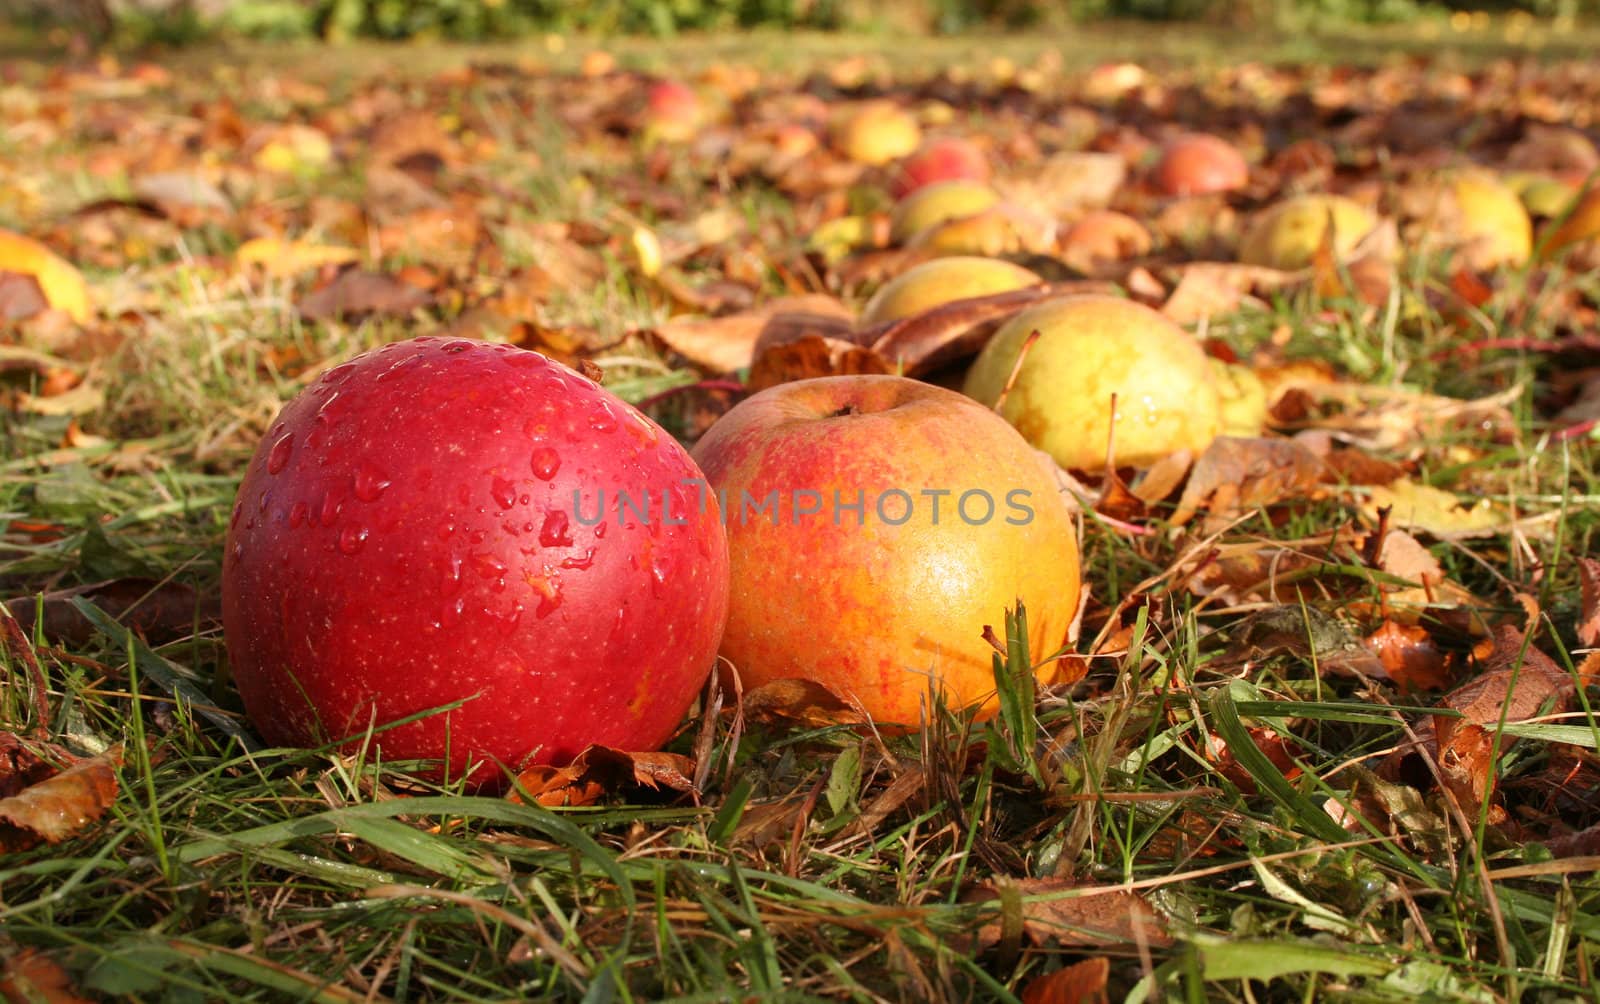 Autumn apples in grass